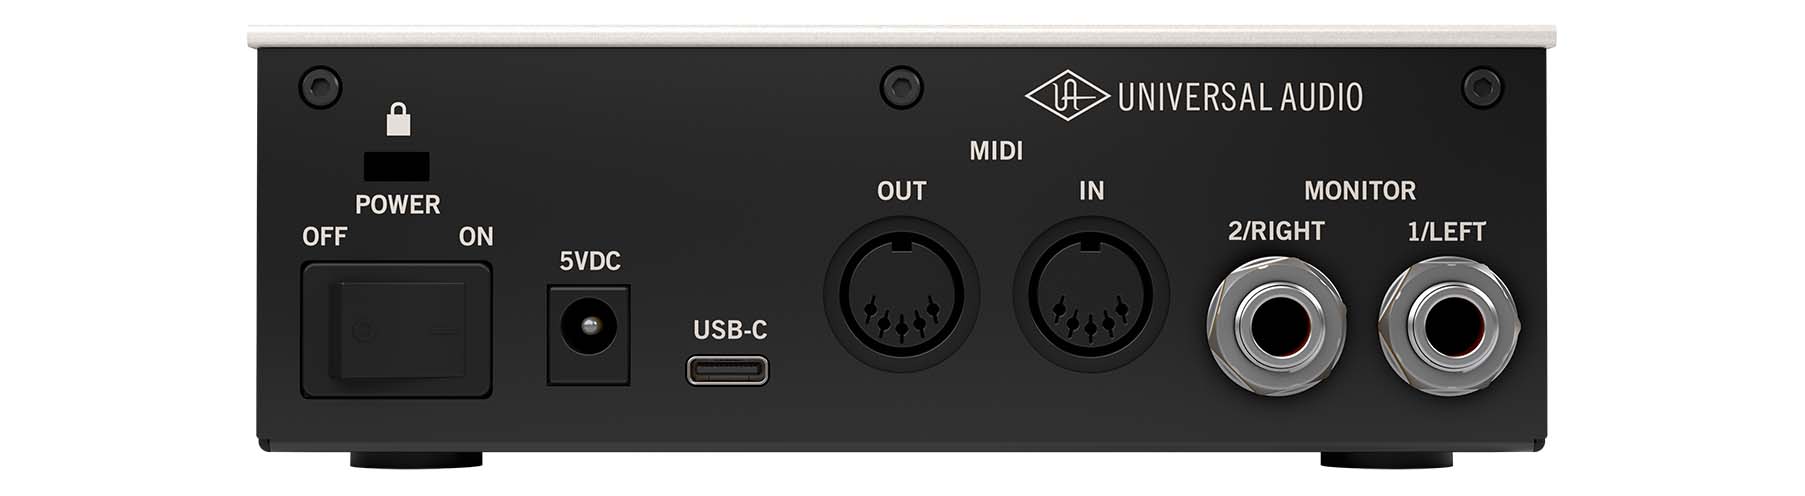 Universal Audio VOLT 1, panel de conexiones